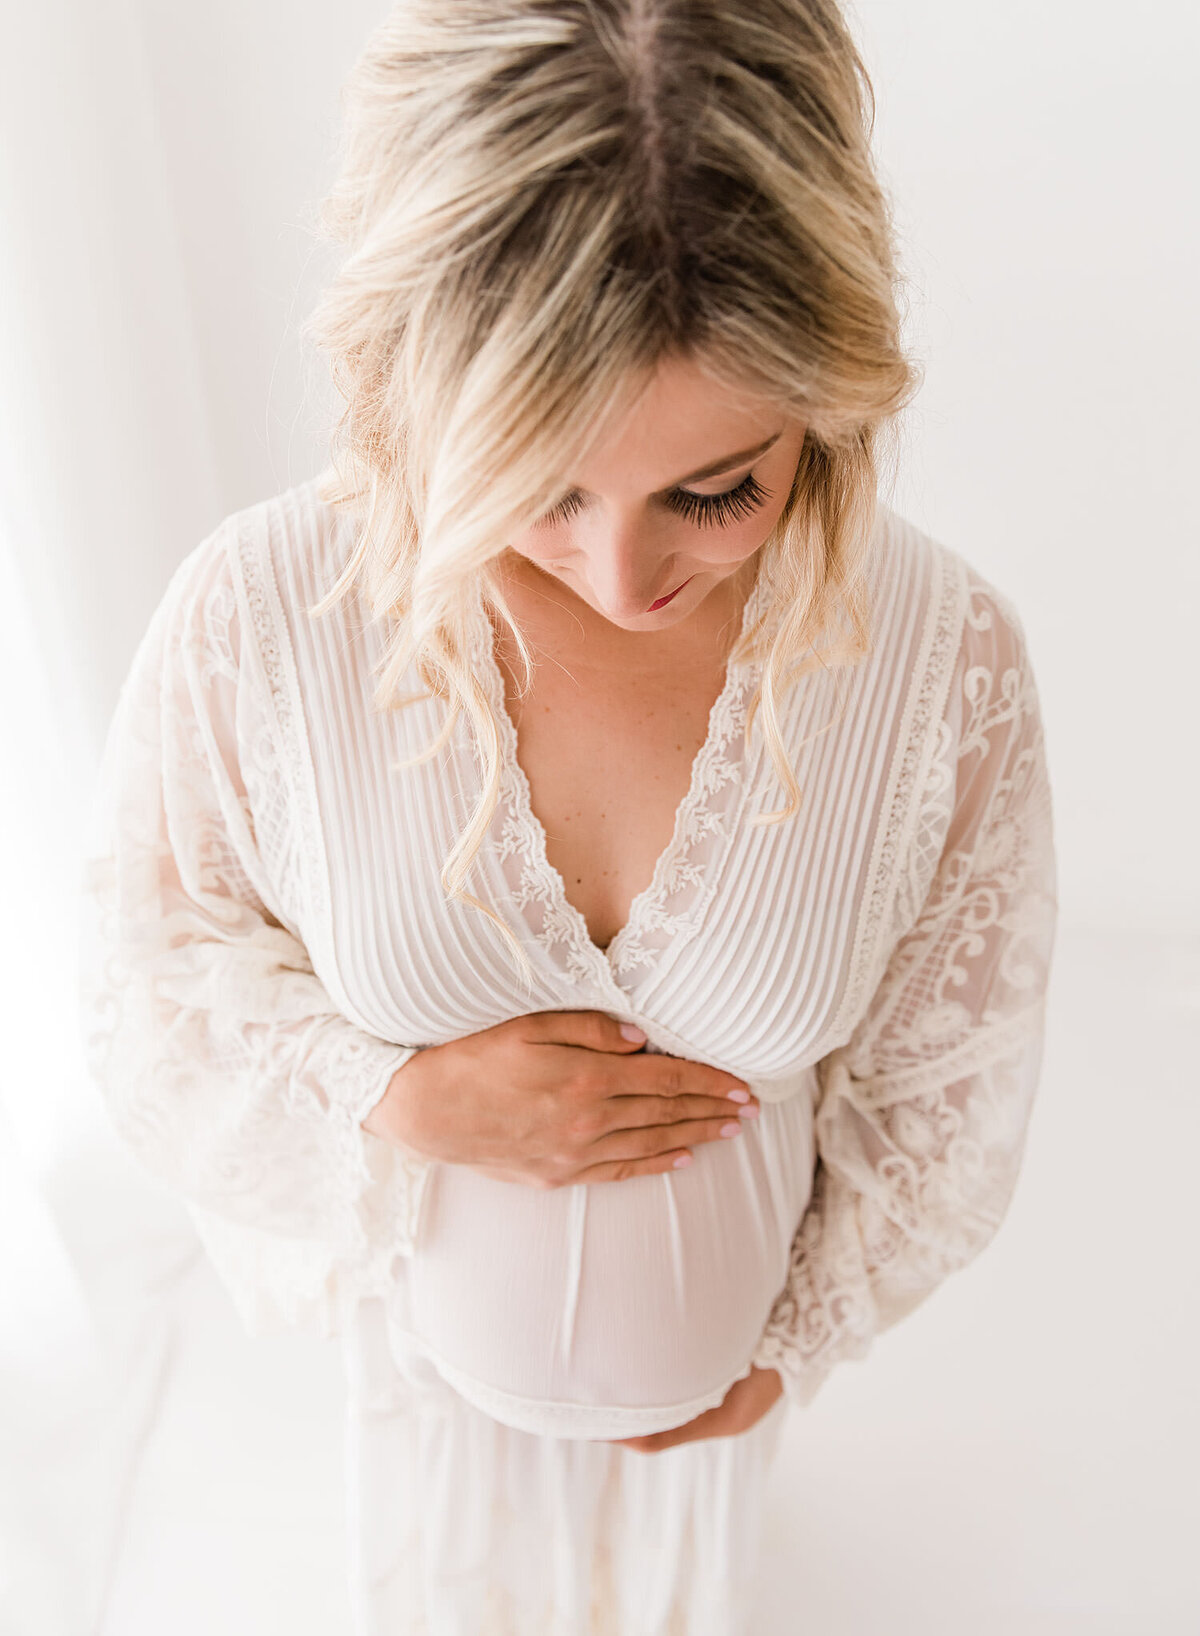 Destin-maternity-photographer-11